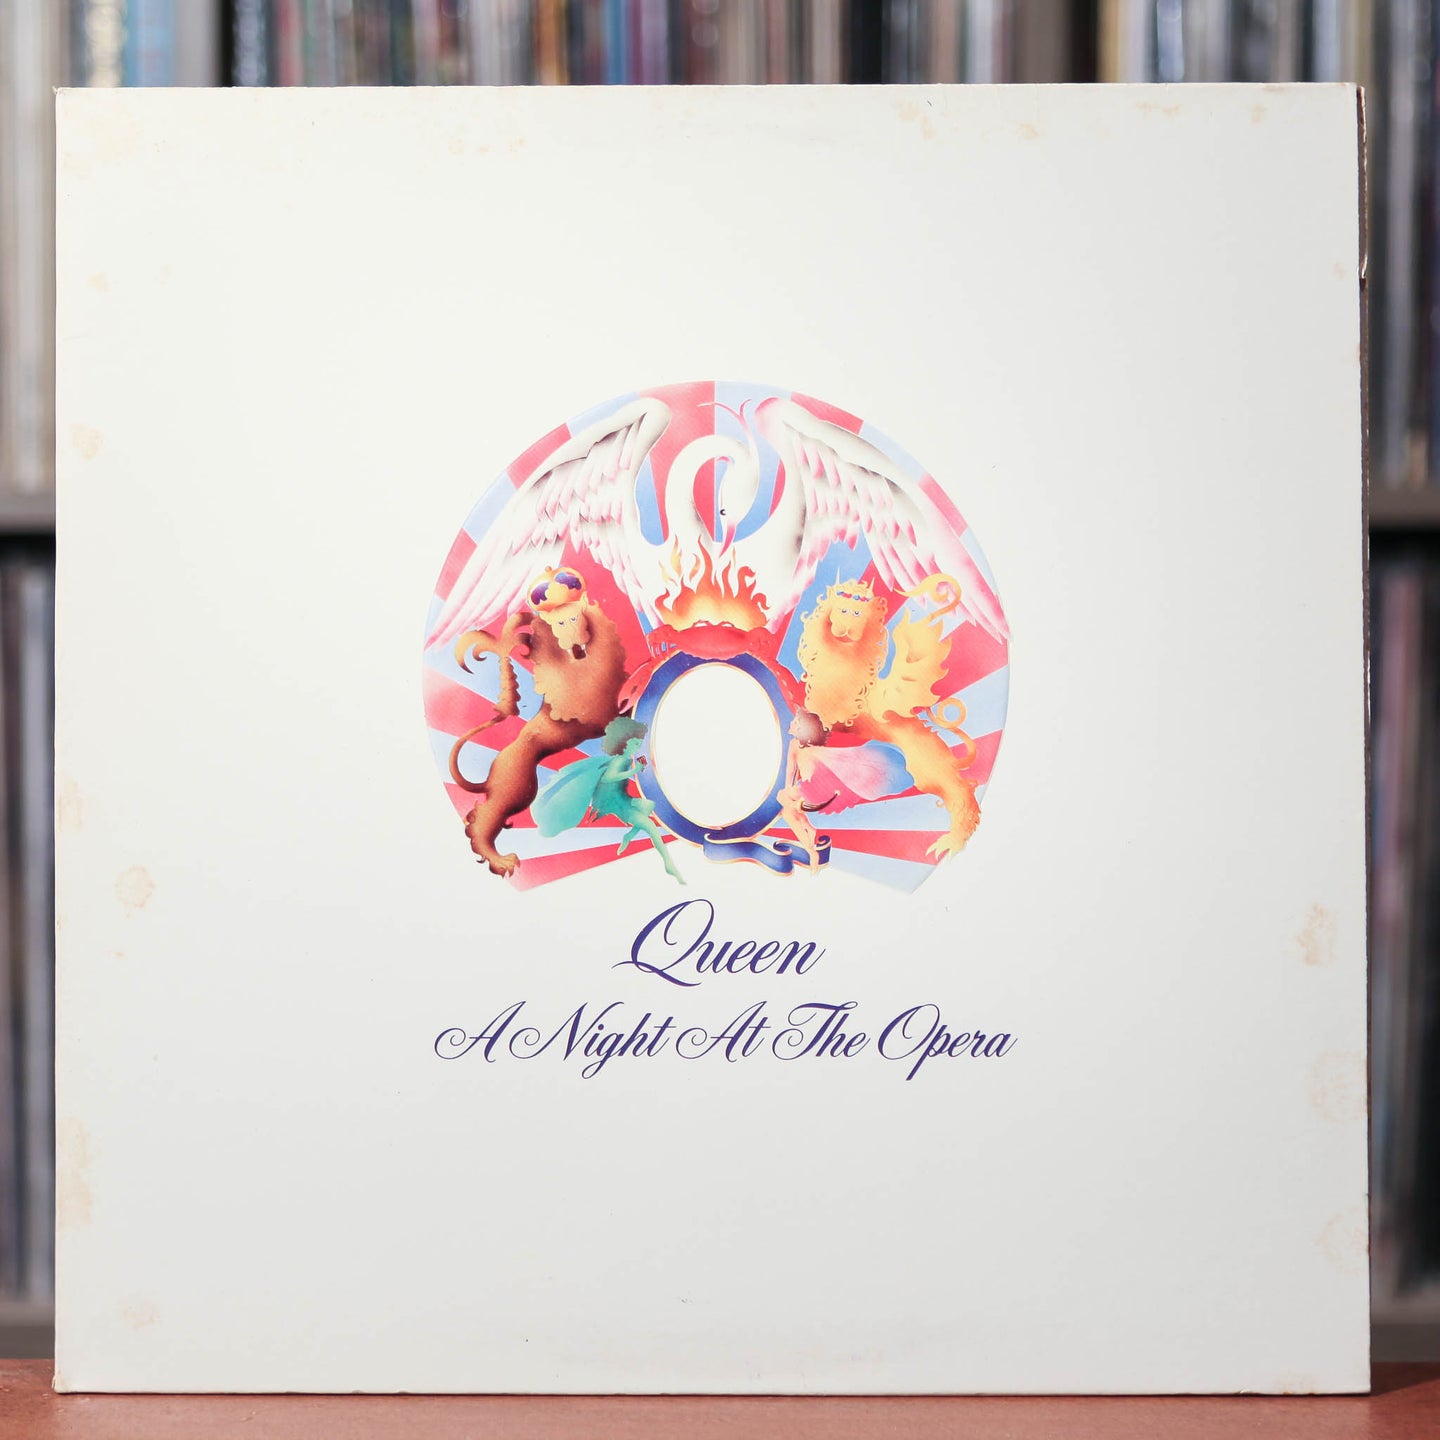 Queen - A Night At The Opera - 1975 Elektra, VG+/EX